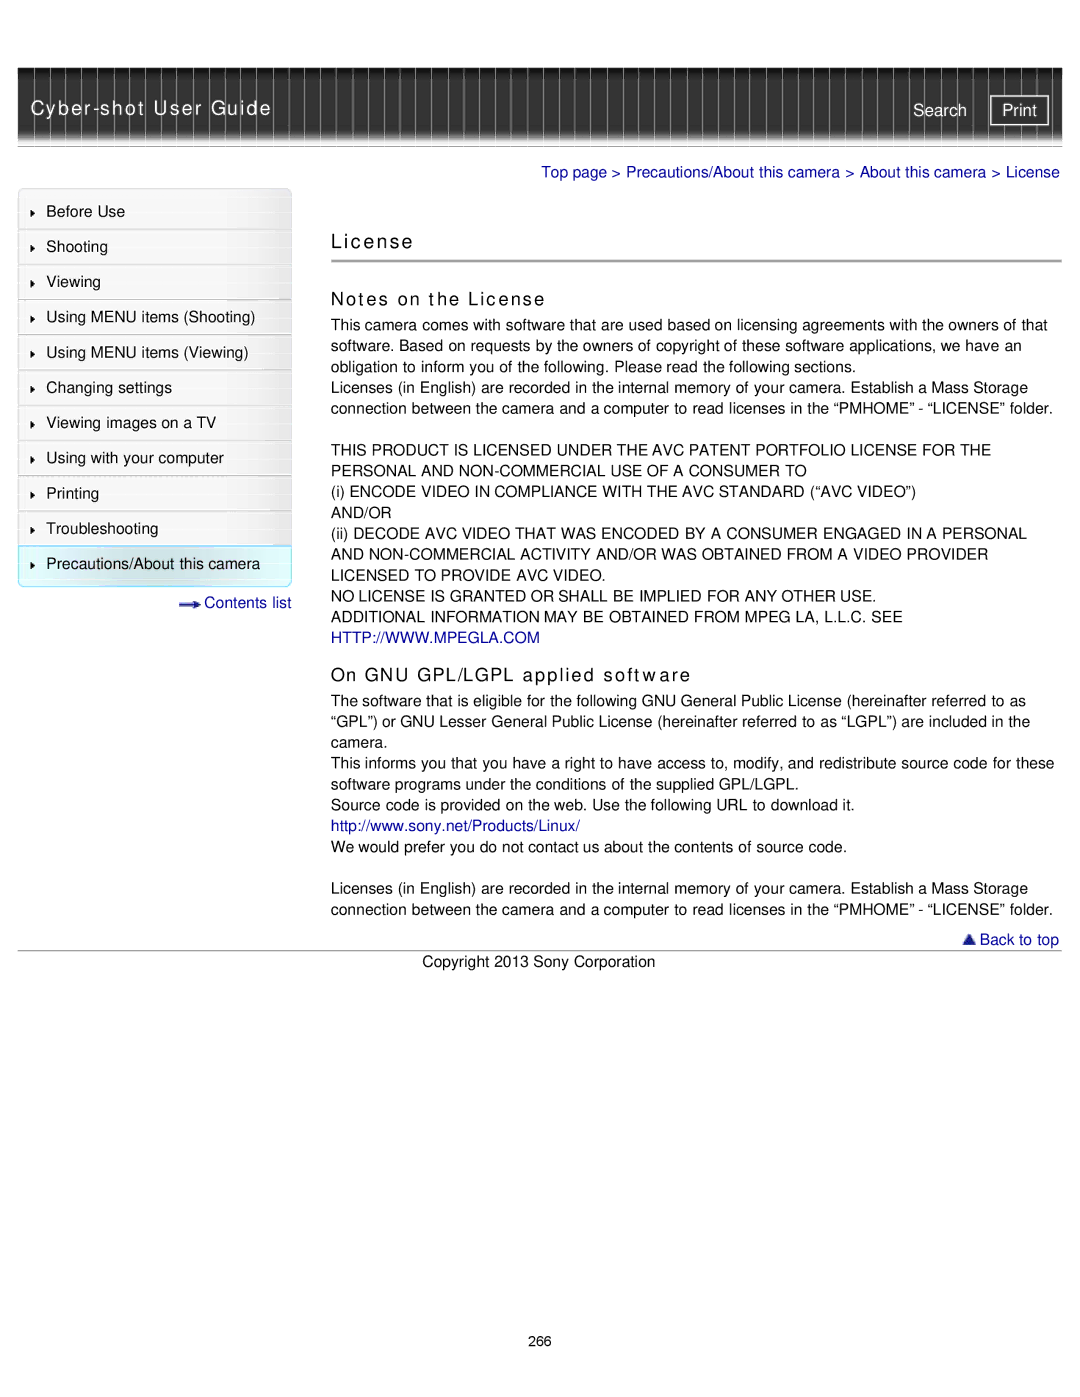 Sony DSC-RX1/RX1R manual License, On GNU GPL/LGPL applied software 